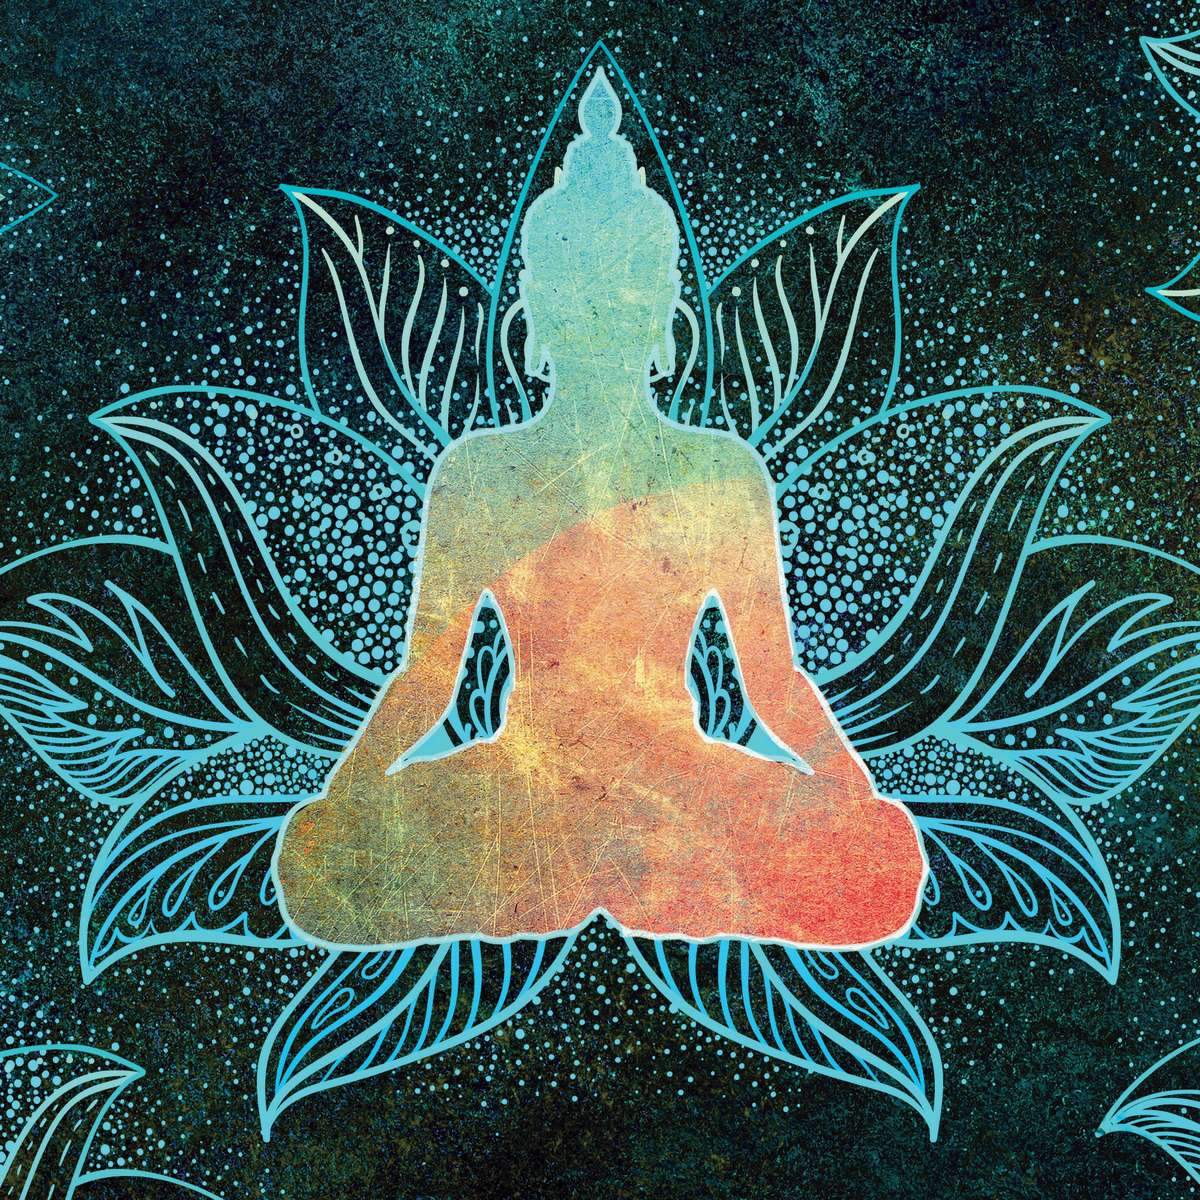 spiritual meditation paintings